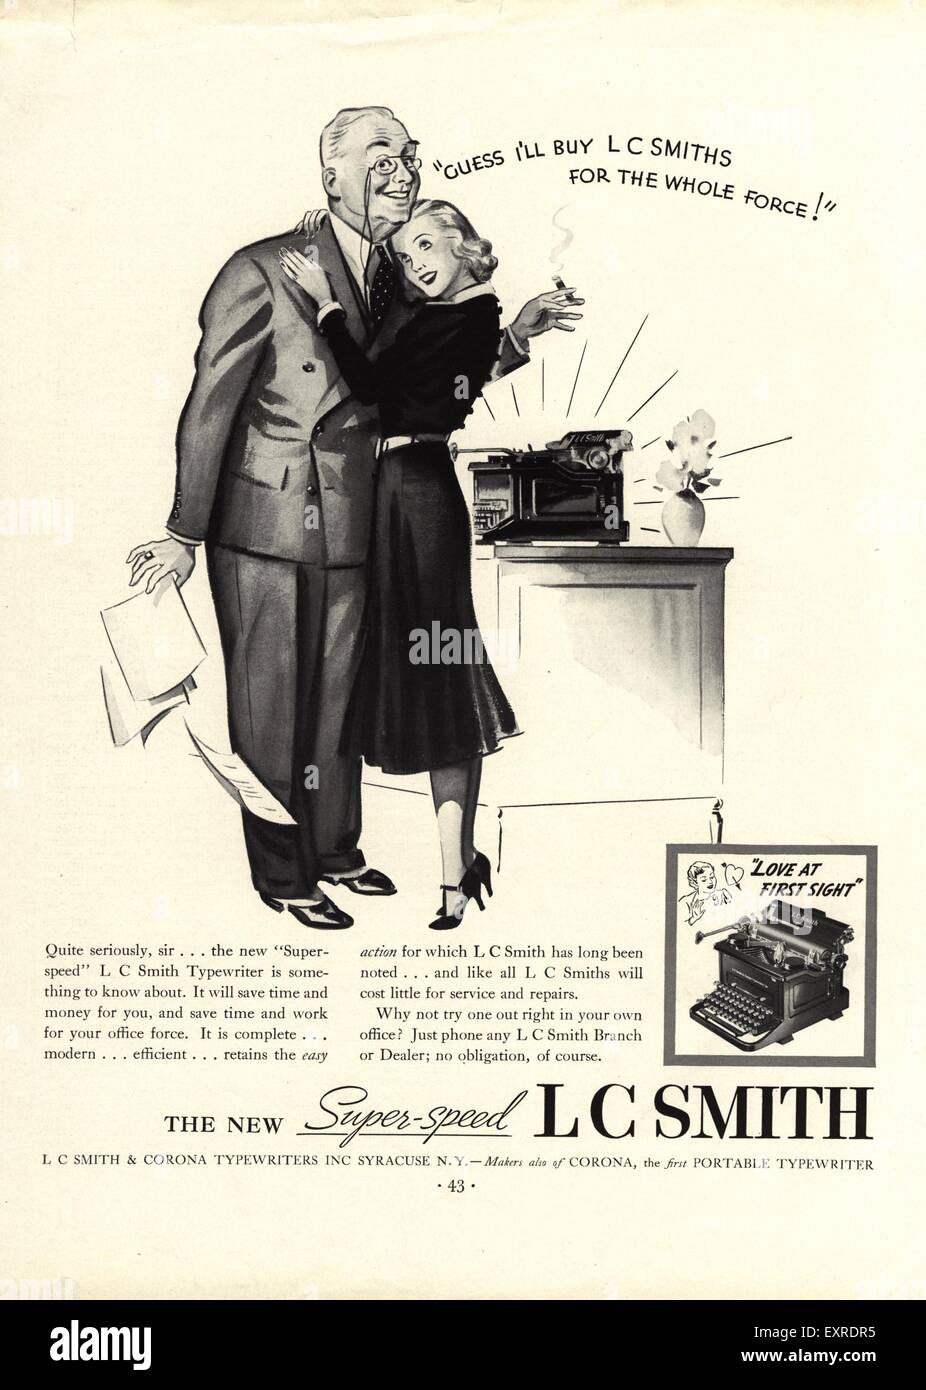 1940s USA Smith-Corona Magazine Advert Stock Photo